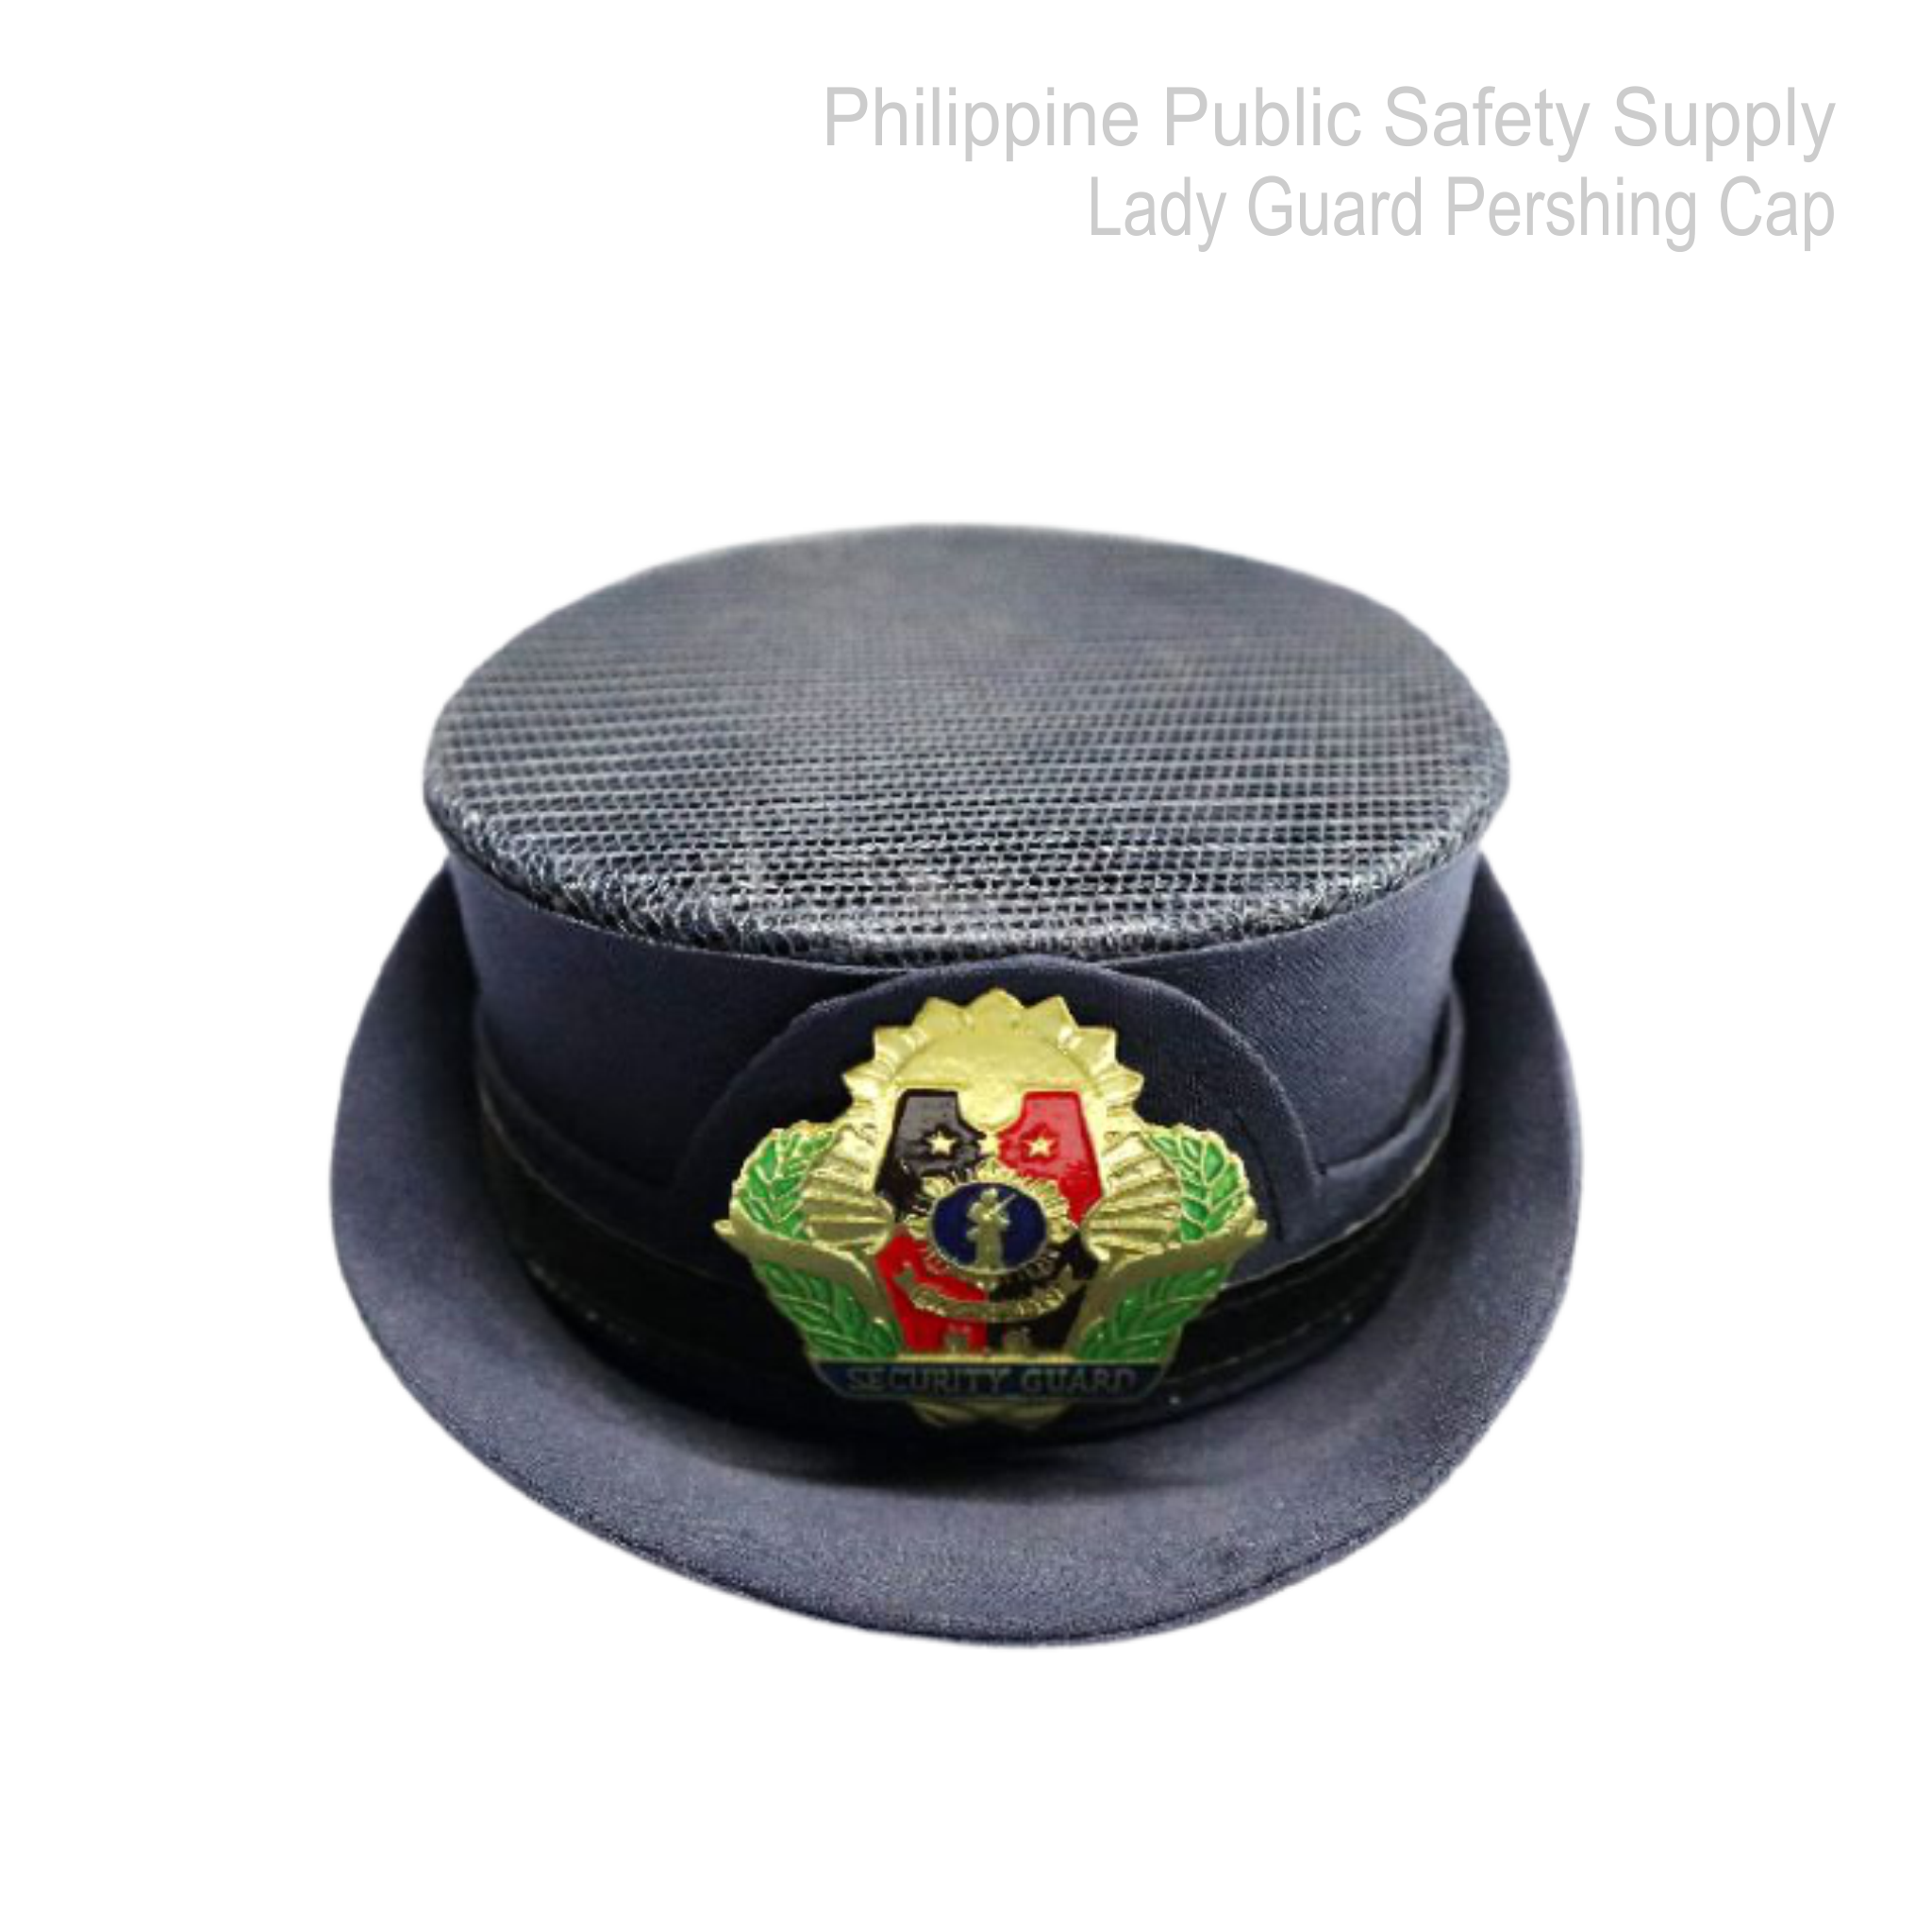 Lady Guard Pershing Cap - PSA-SG